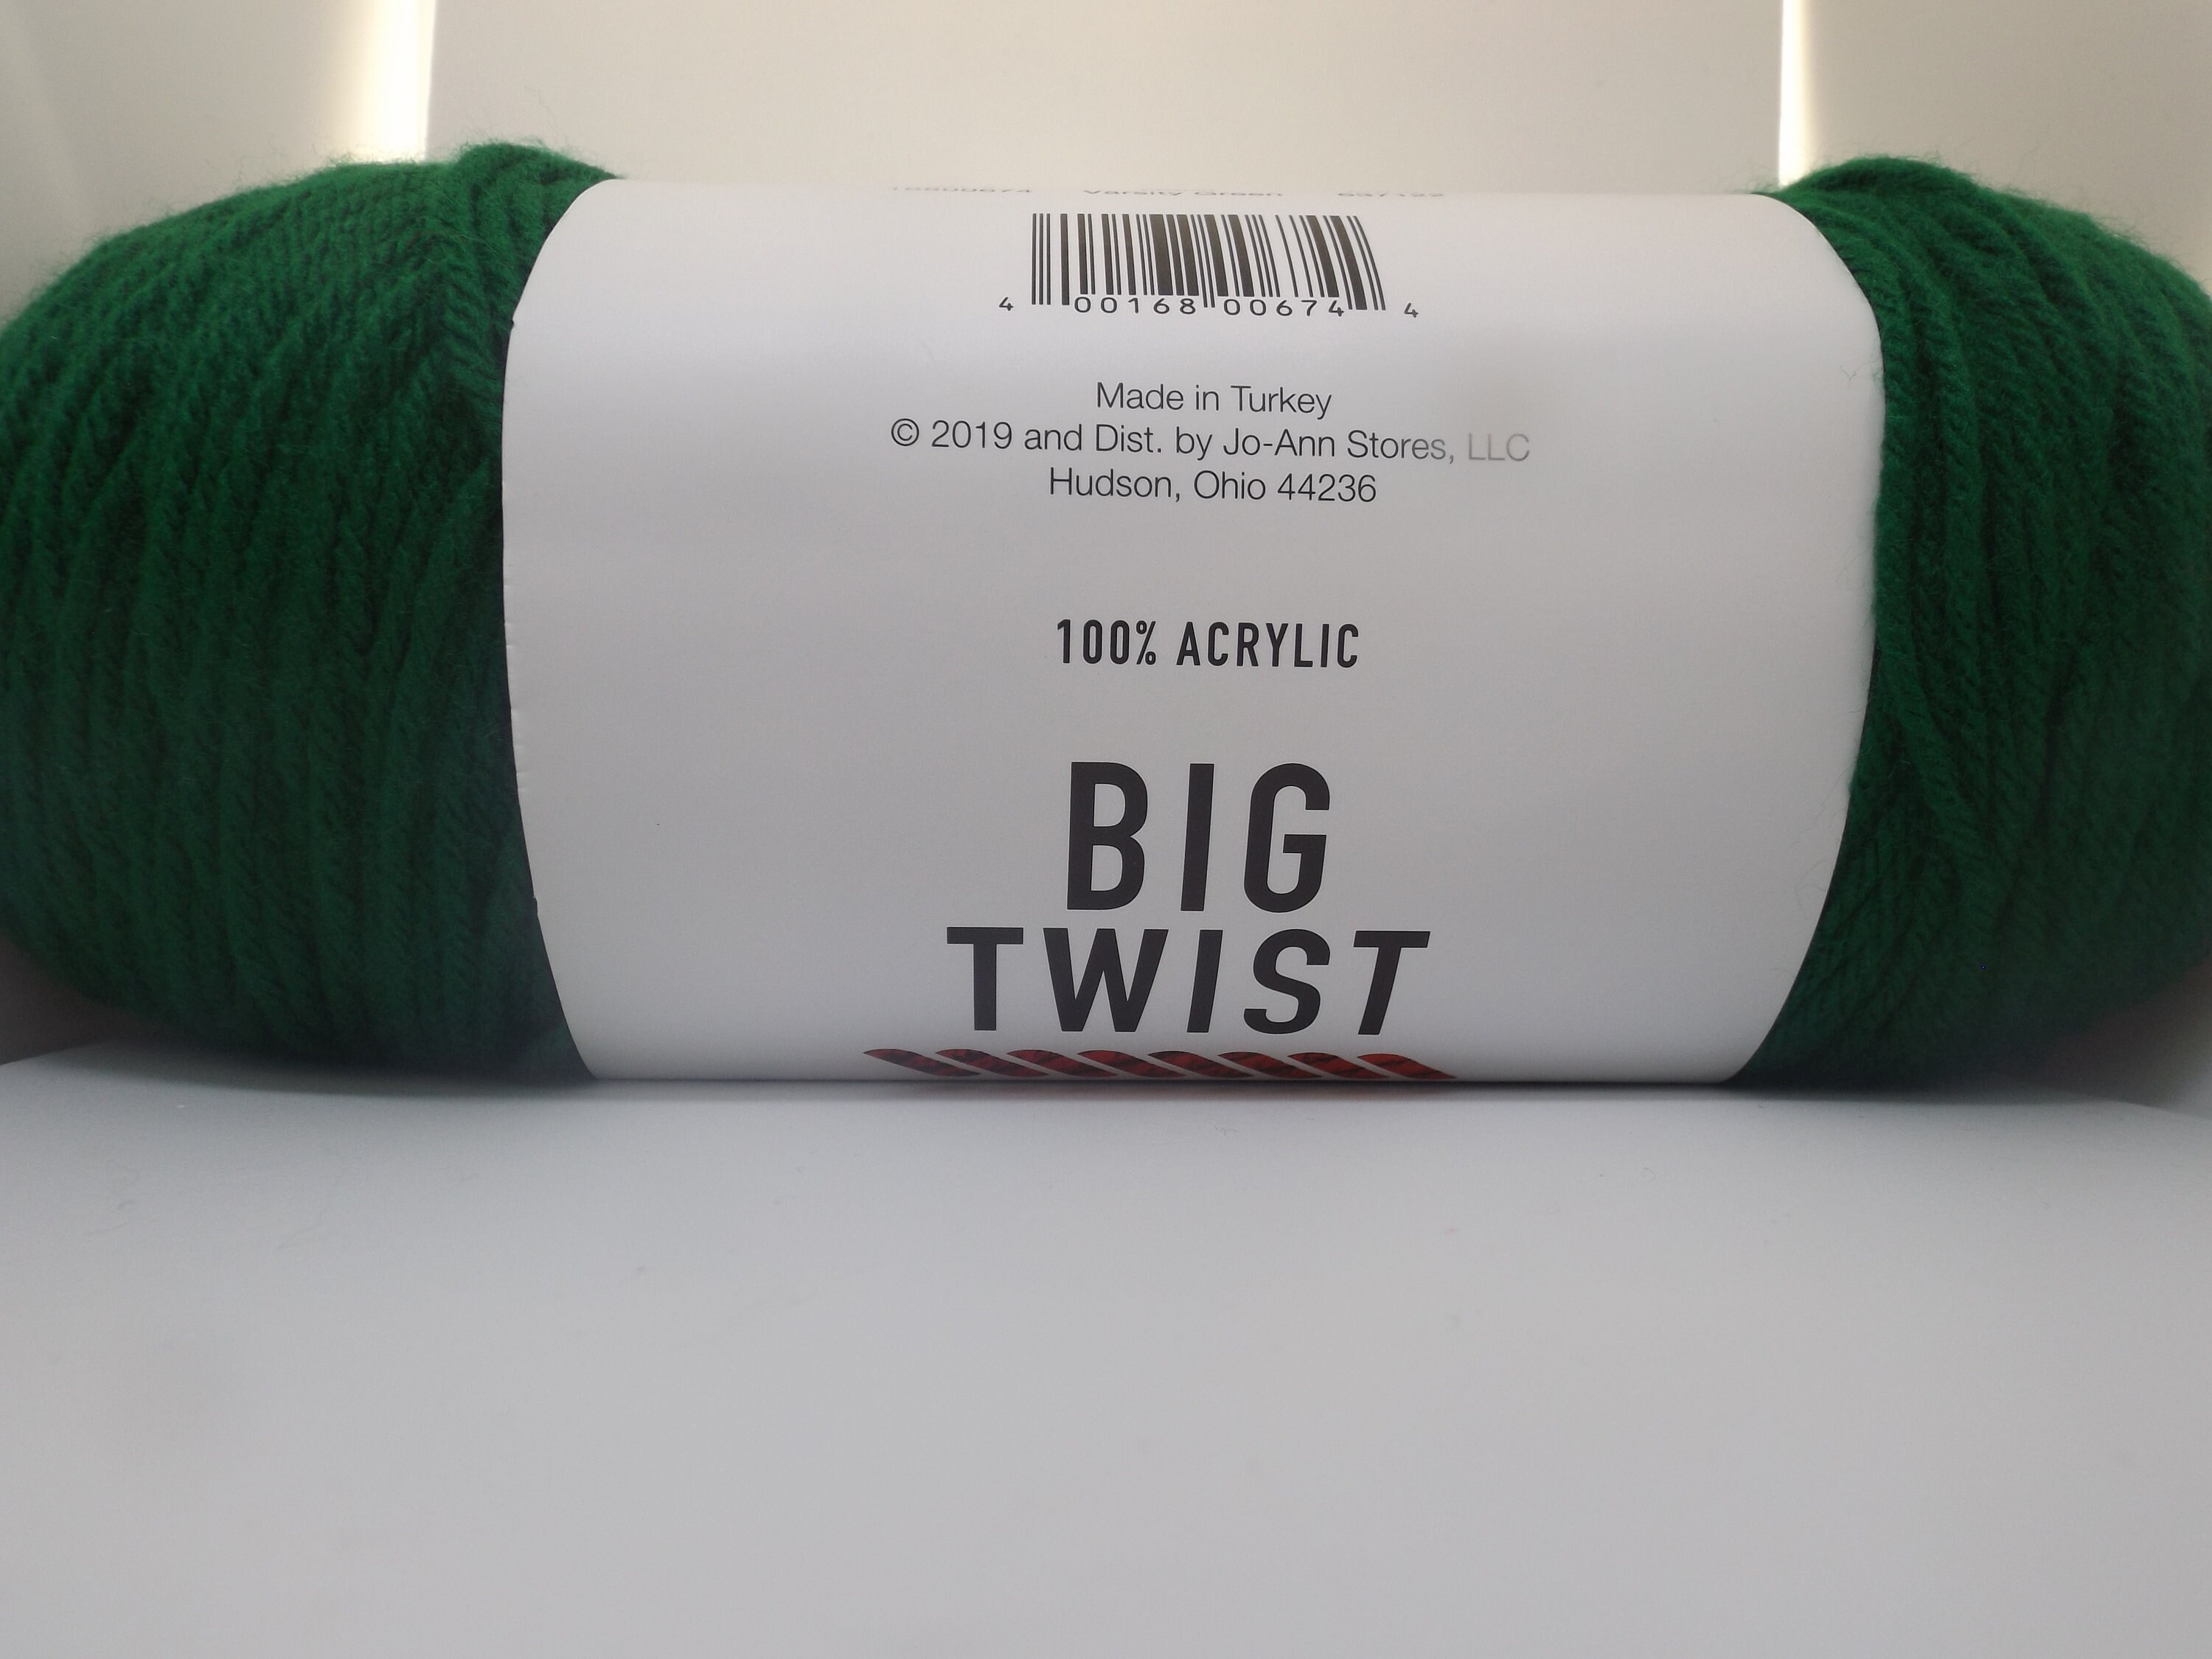 NEW Big Twist Value Yarn 100% Acrylic Worsted Weight #4, 6oz